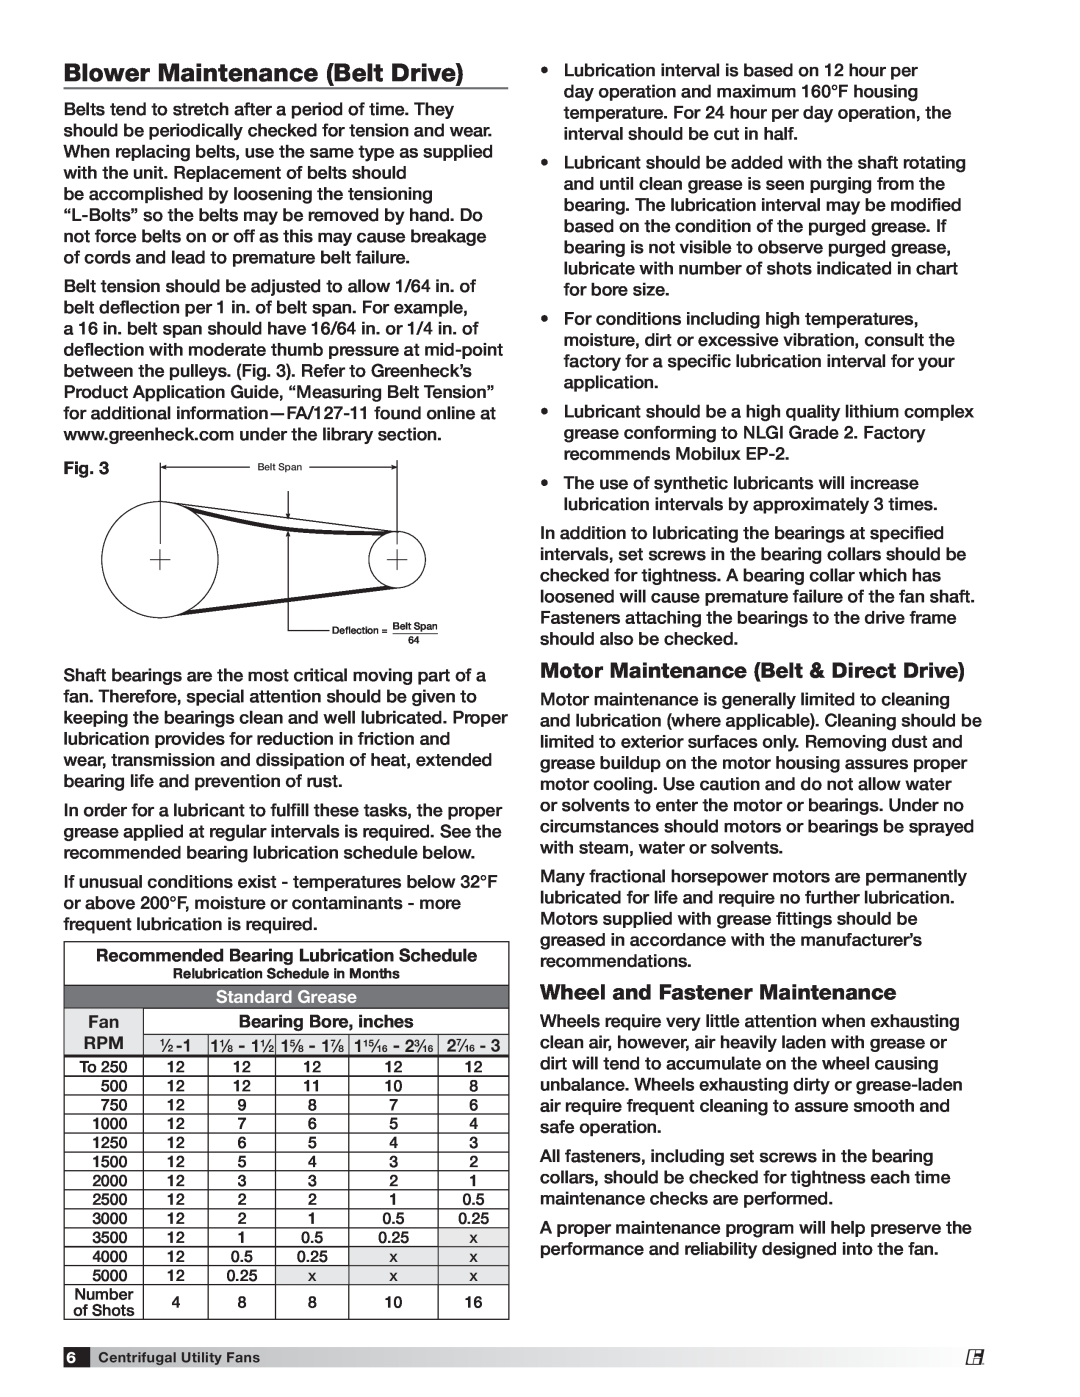 Greenheck Fan Model SWB Series 300 manual Blower Maintenance Belt Drive, Motor Maintenance Belt & Direct Drive, 11⁄8 - 11⁄2 